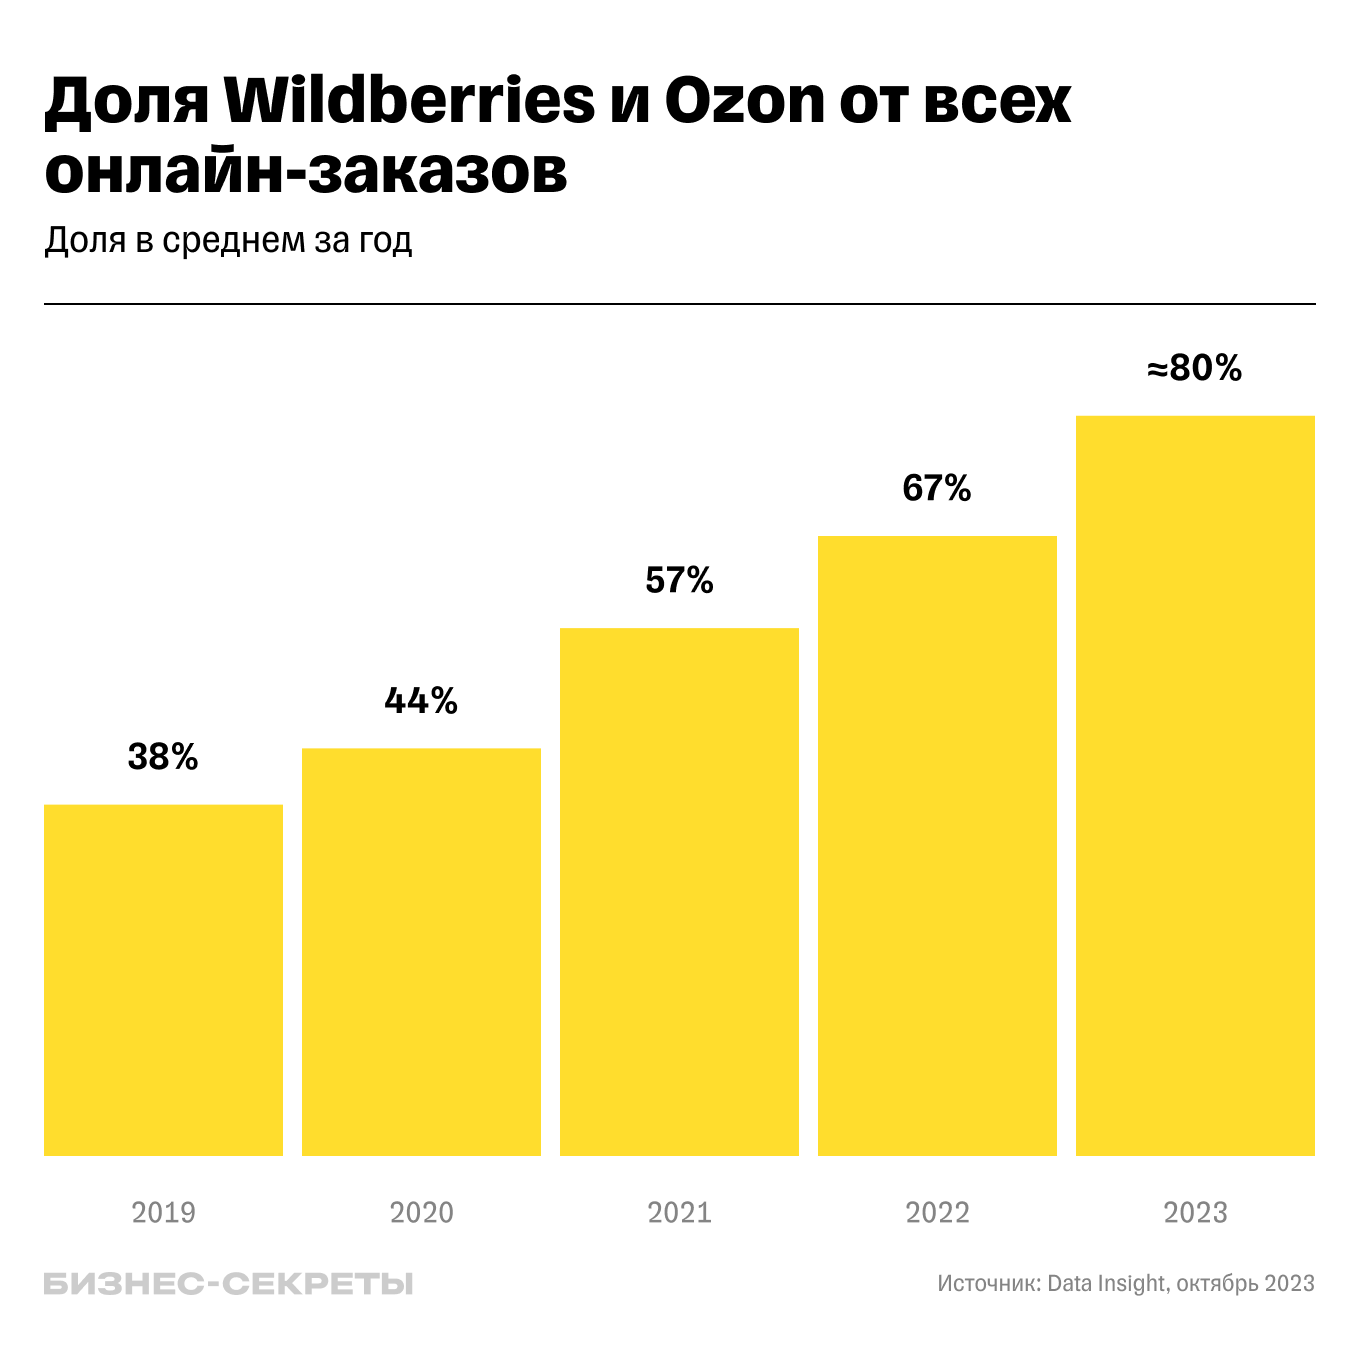 доля Ozon и Wildberries от всех заказов